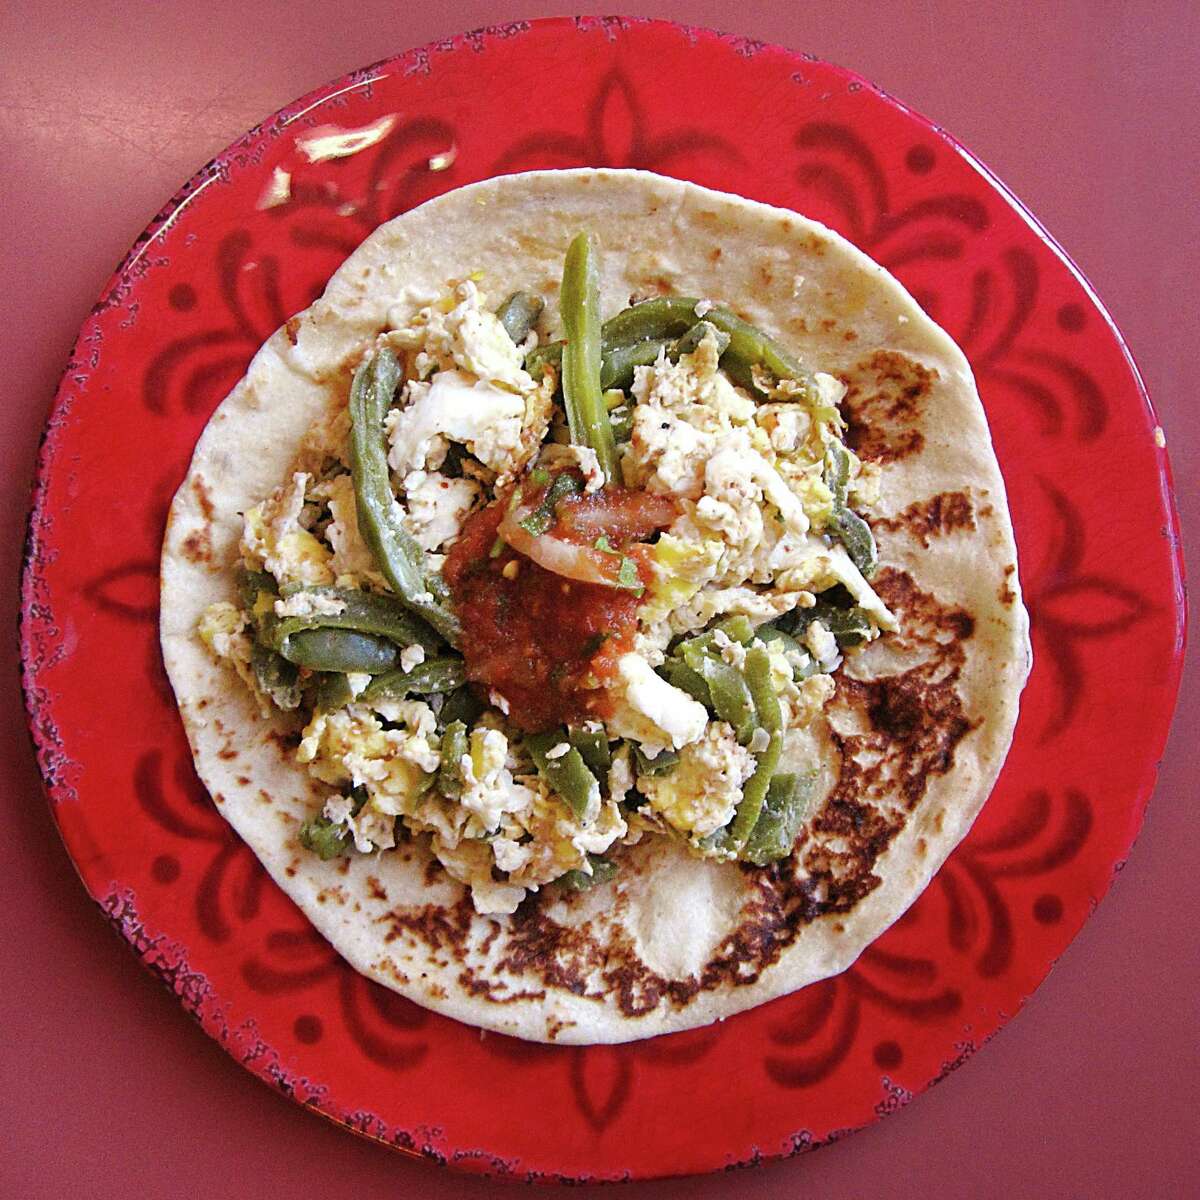 Nopales and egg taco on a handmade flour tortilla from La Cavaña Mexican Restaurant.